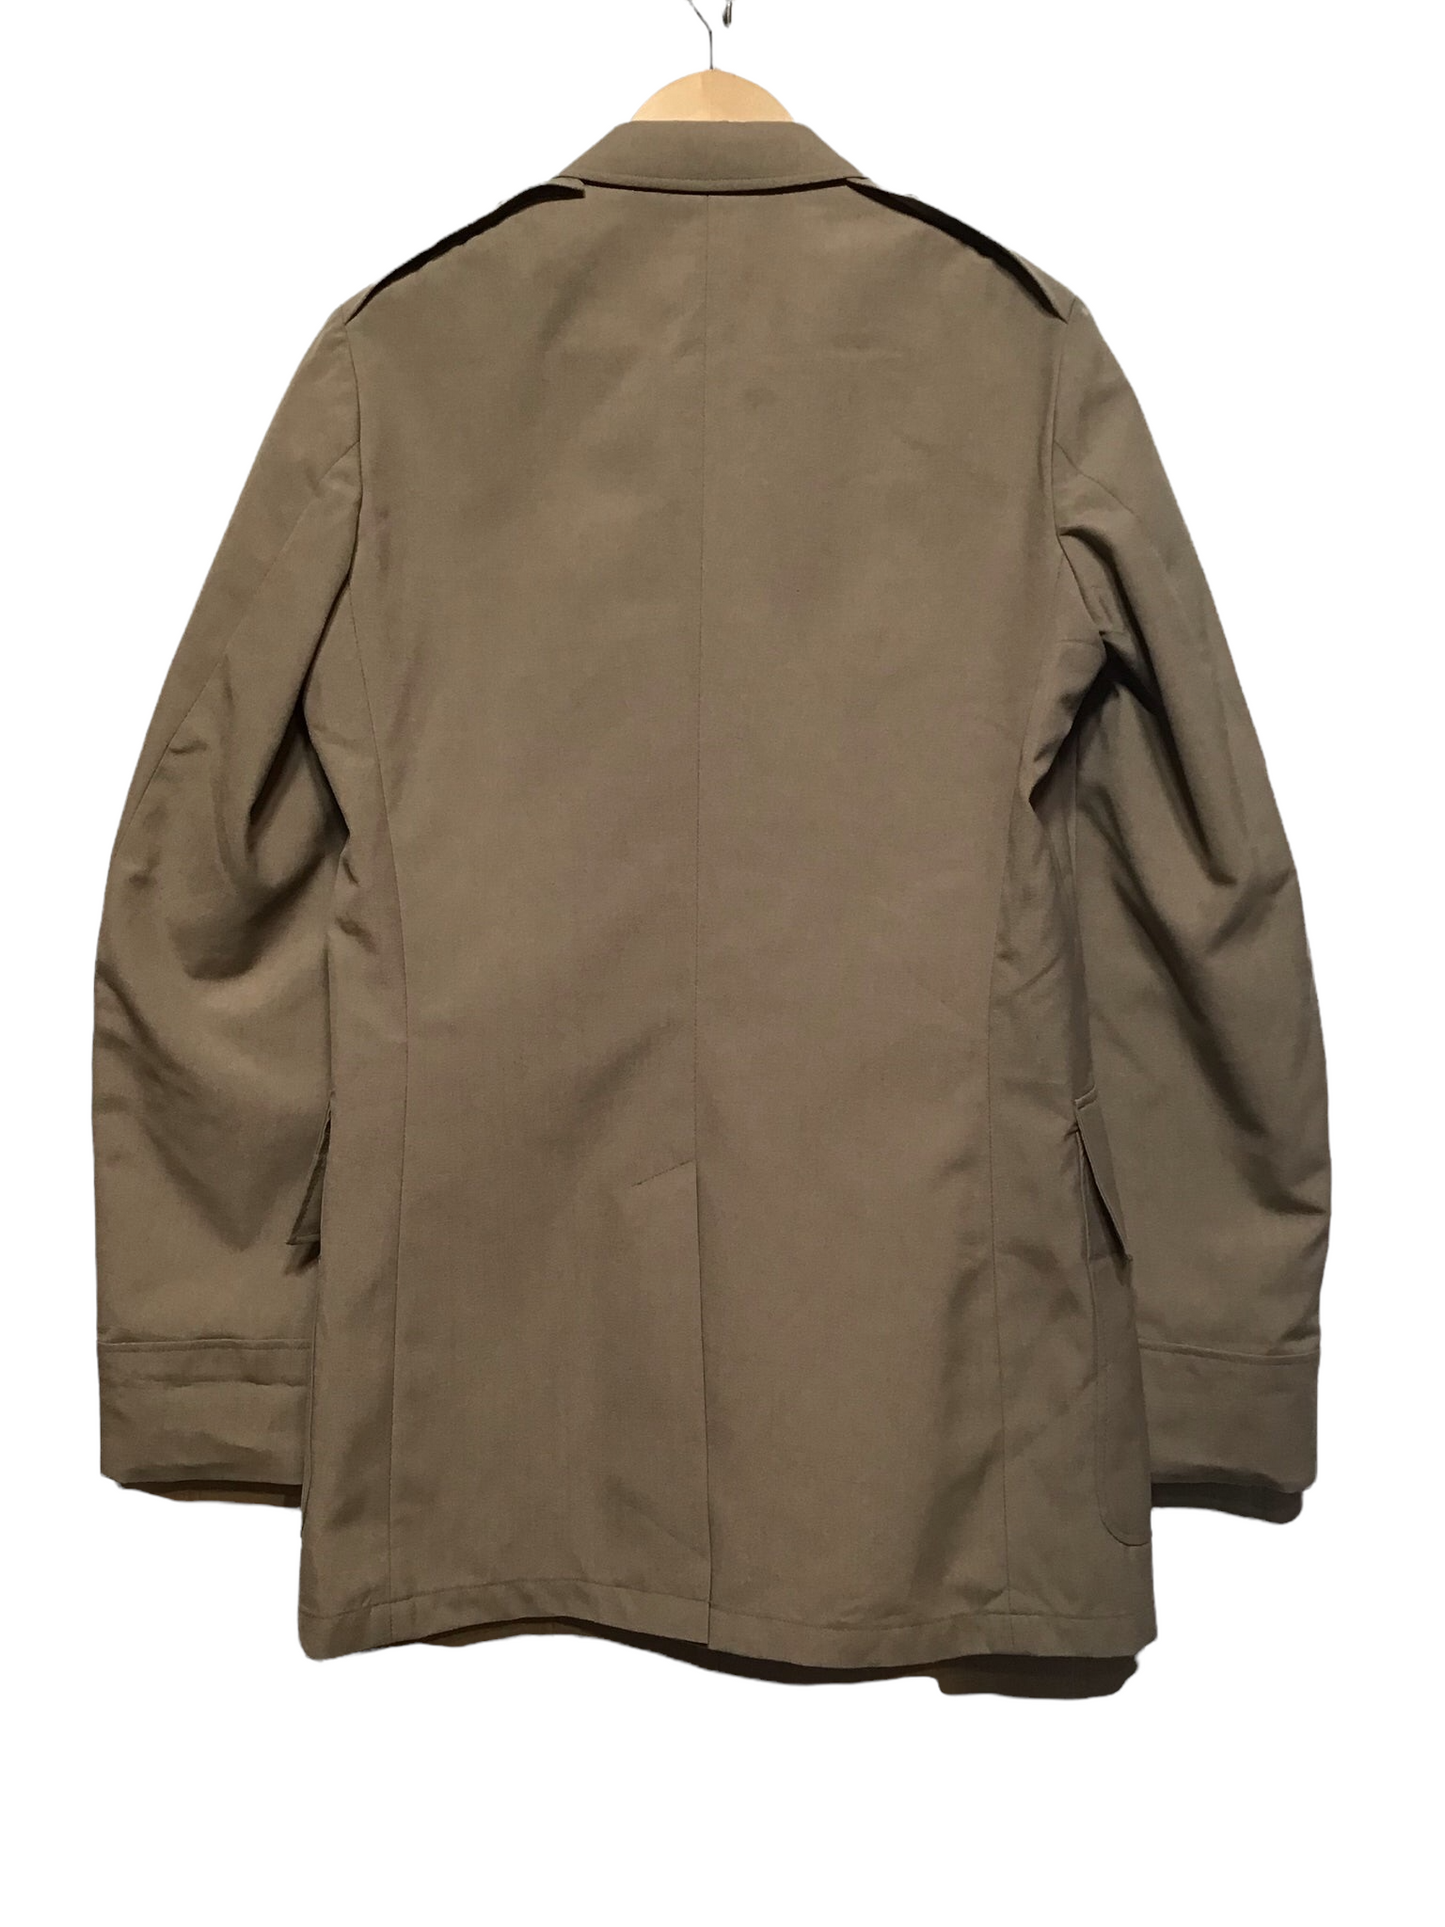 Women’s Military Style Jacket (Size M)